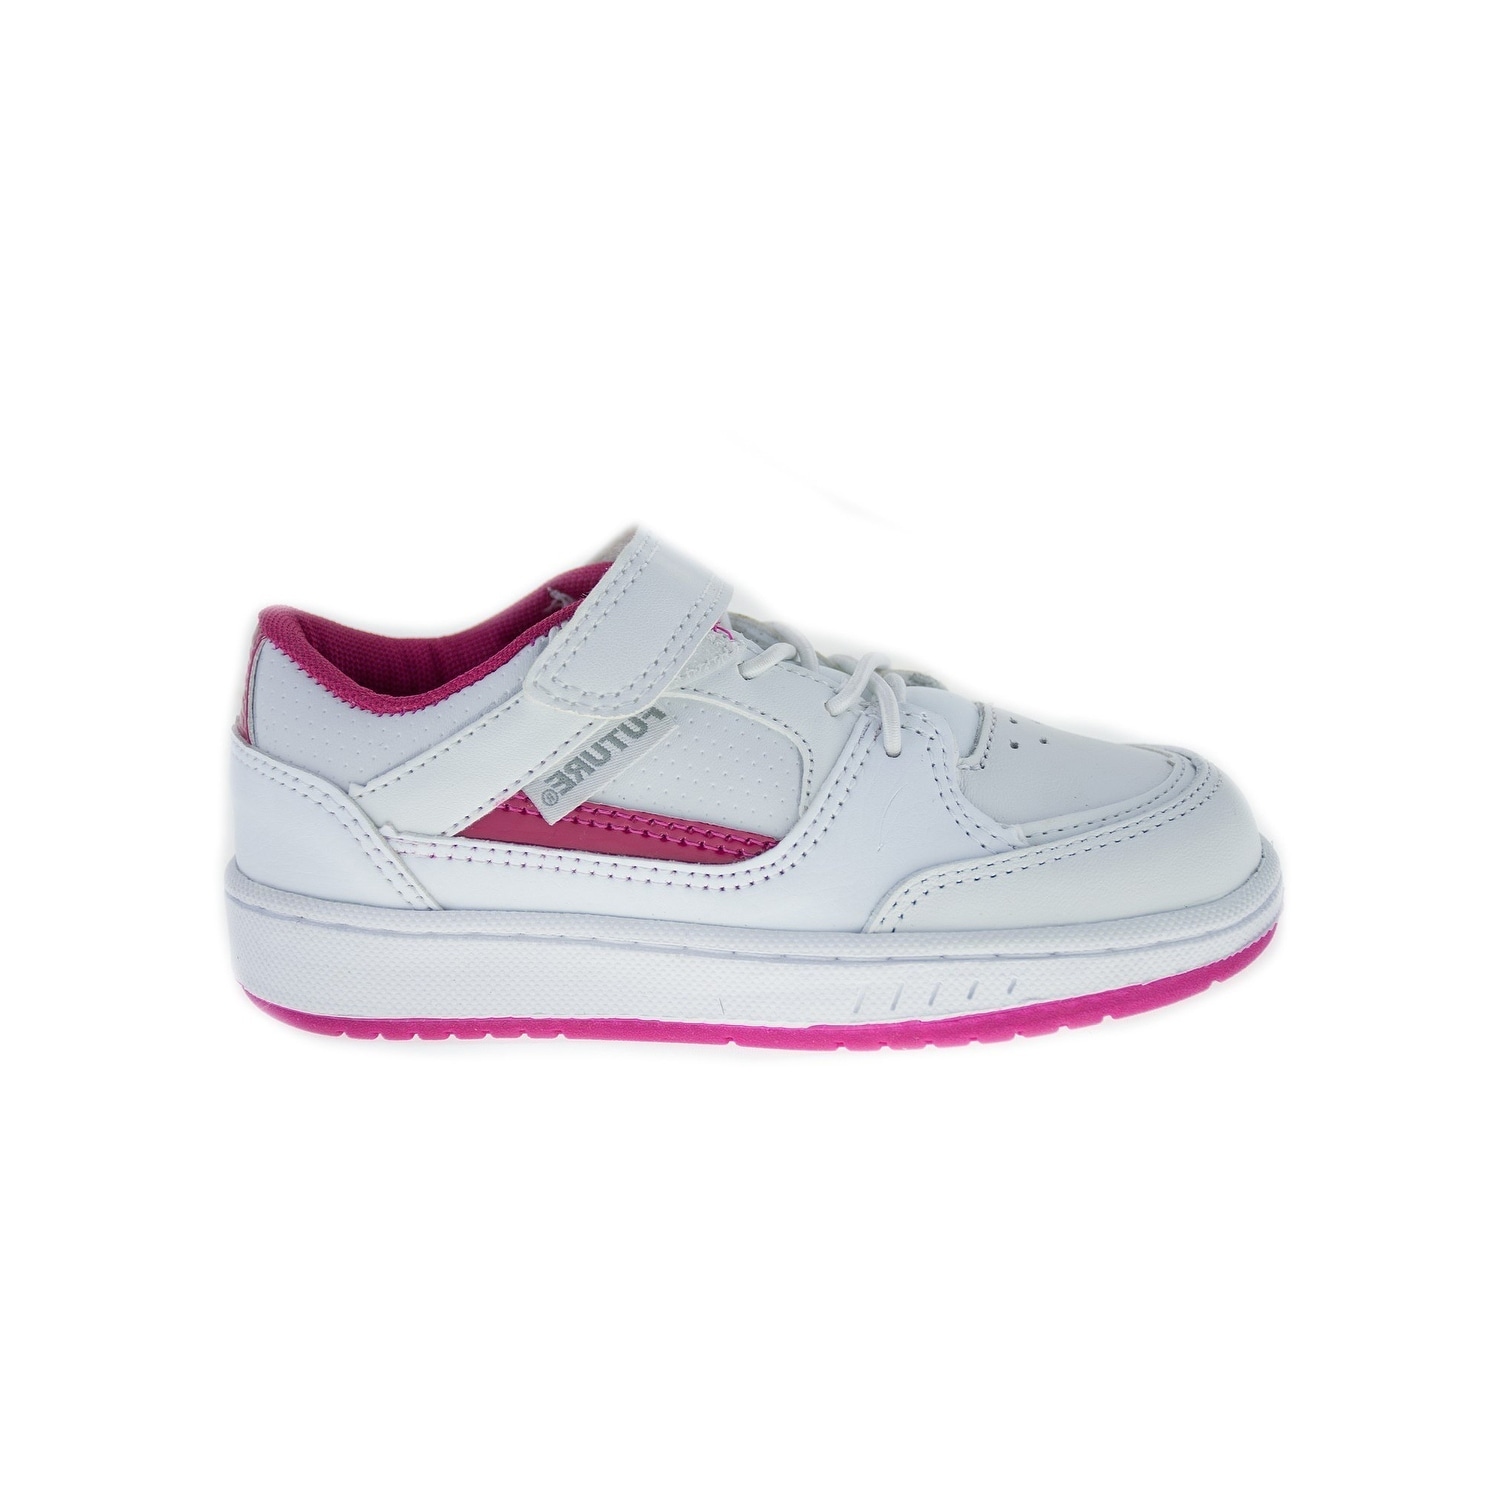 white tennis shoes for little girls